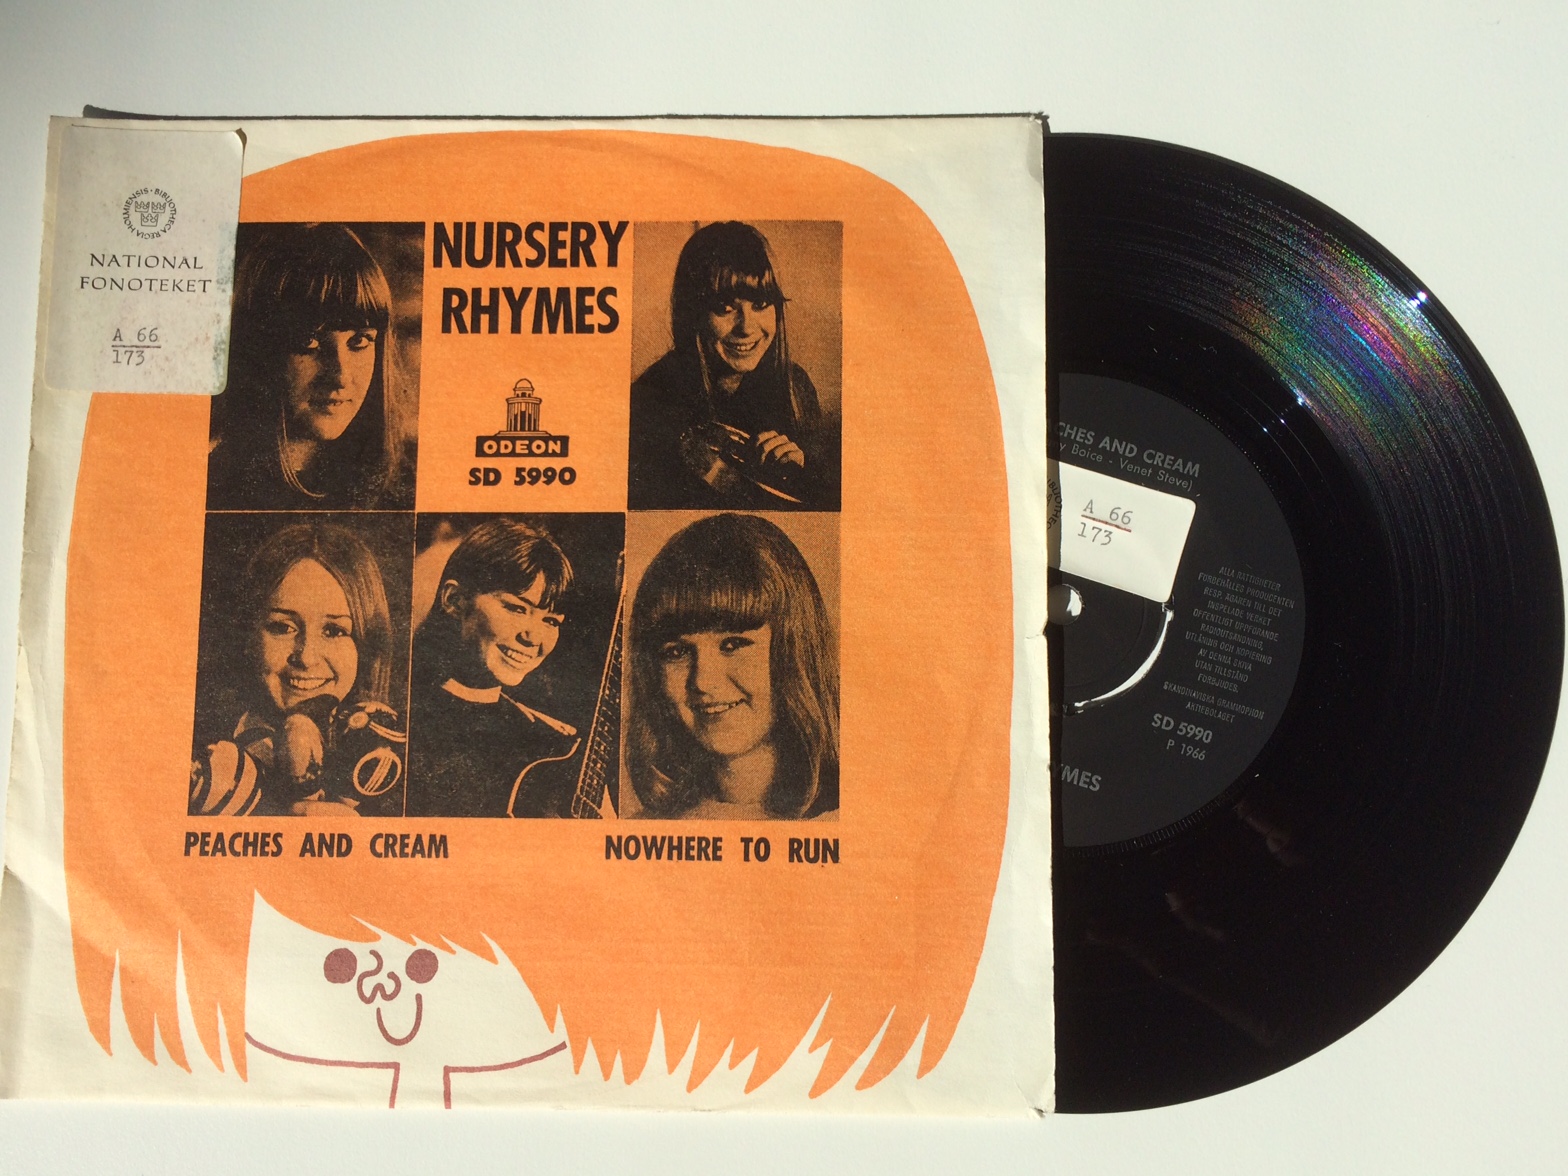 Tidstypisk frisyr på skivomslaget. Nursery Rhymes: “Peaches and cream” (Odeon, 1966)